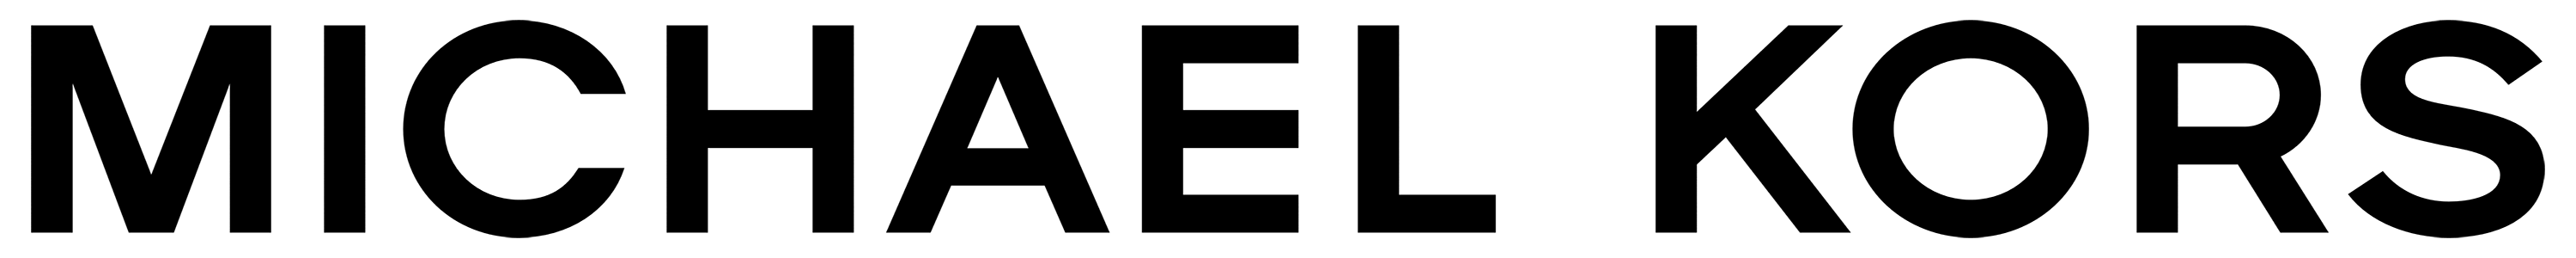 Michael Kors Logo PNG HD Isolated